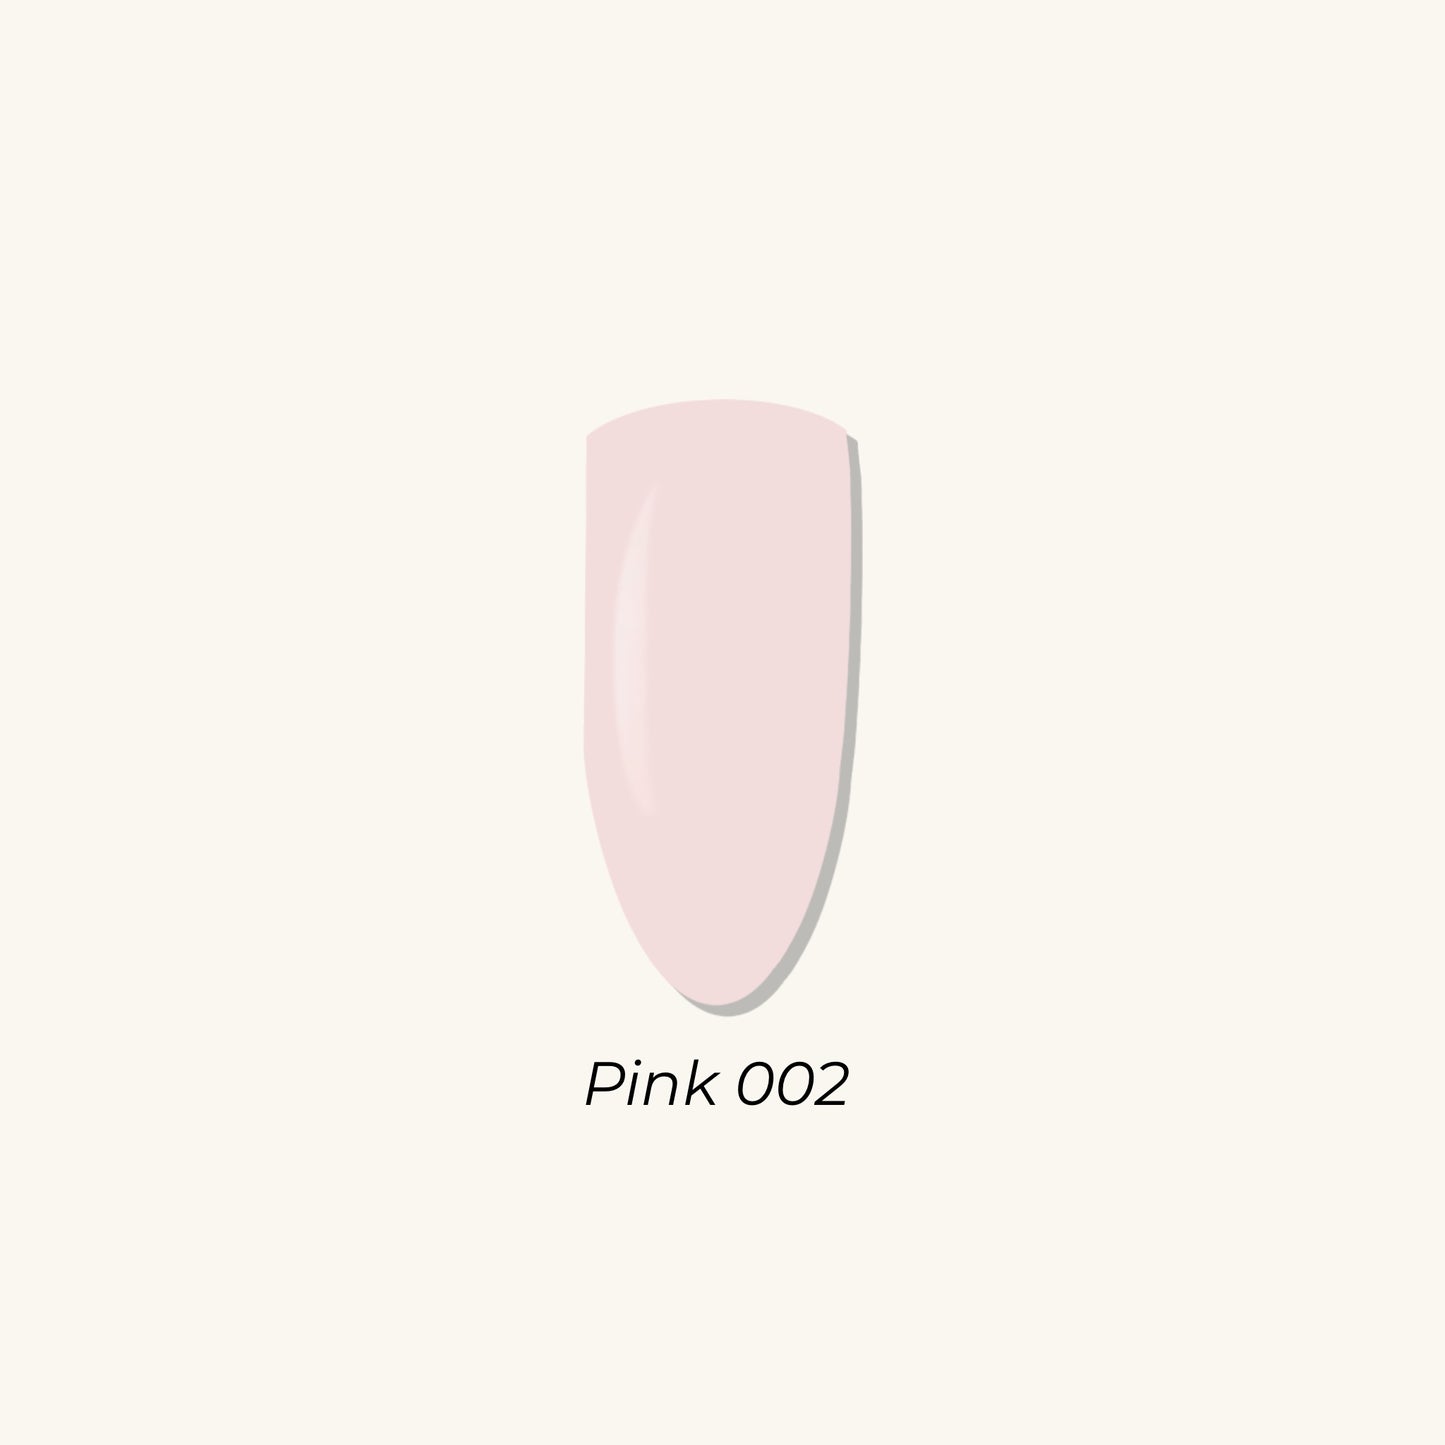 Pink 002